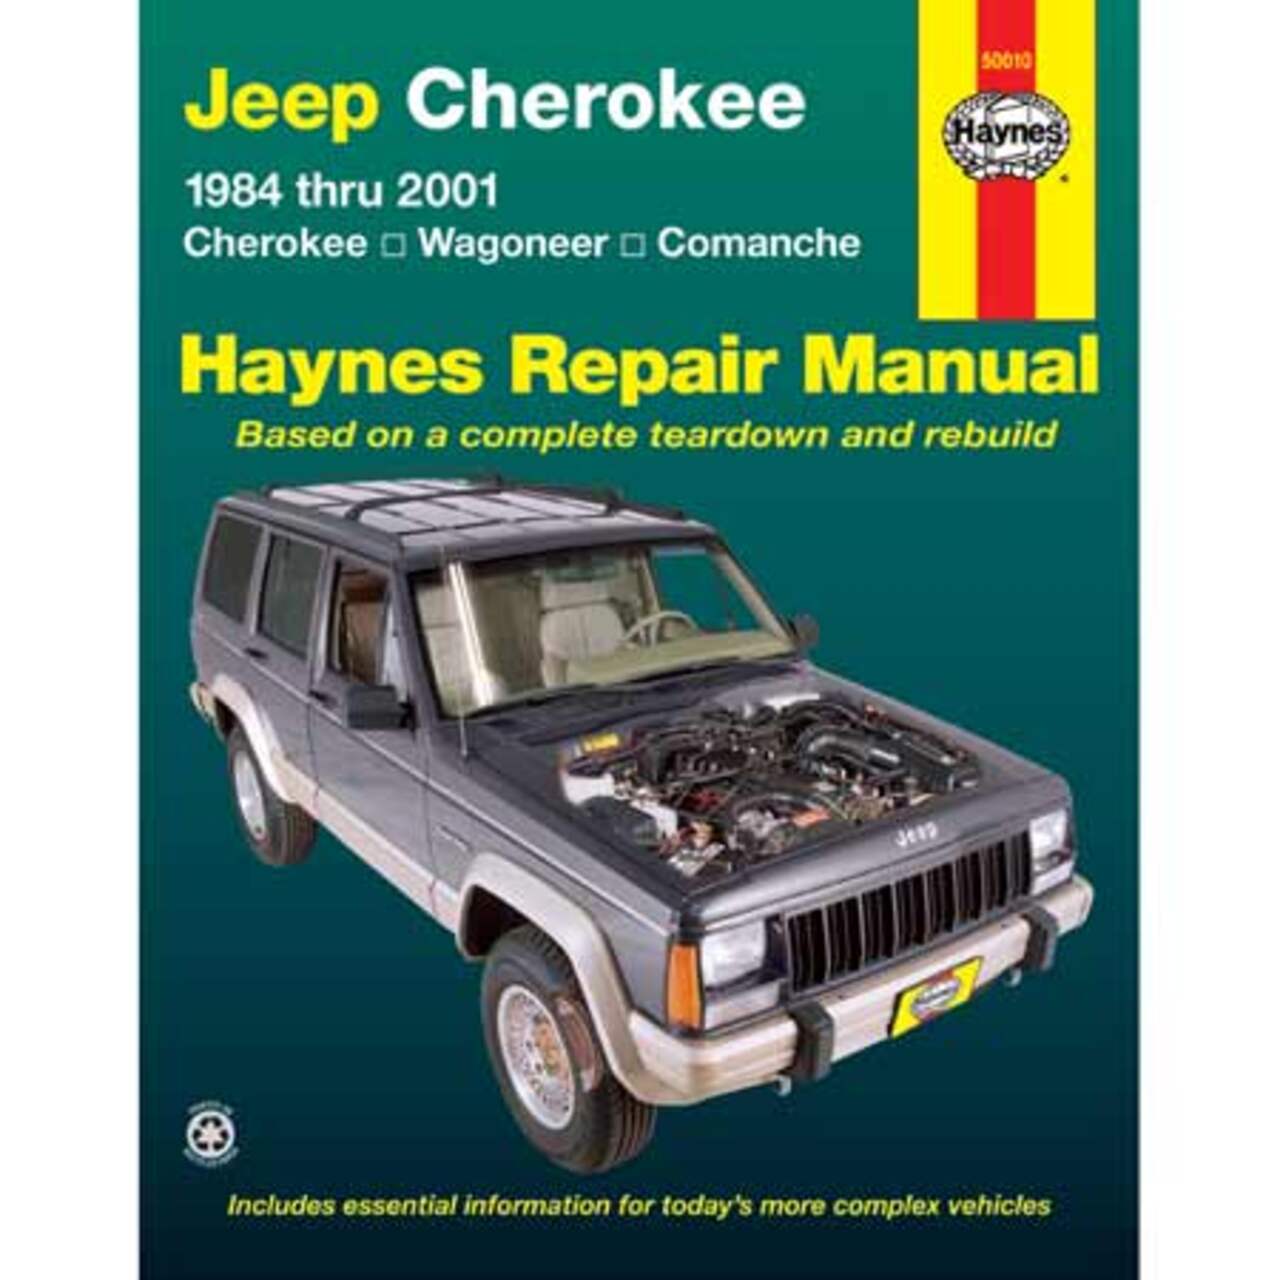 Jeep Cherokee 1984 thru 2001 Haynes Repair Manual, 50010